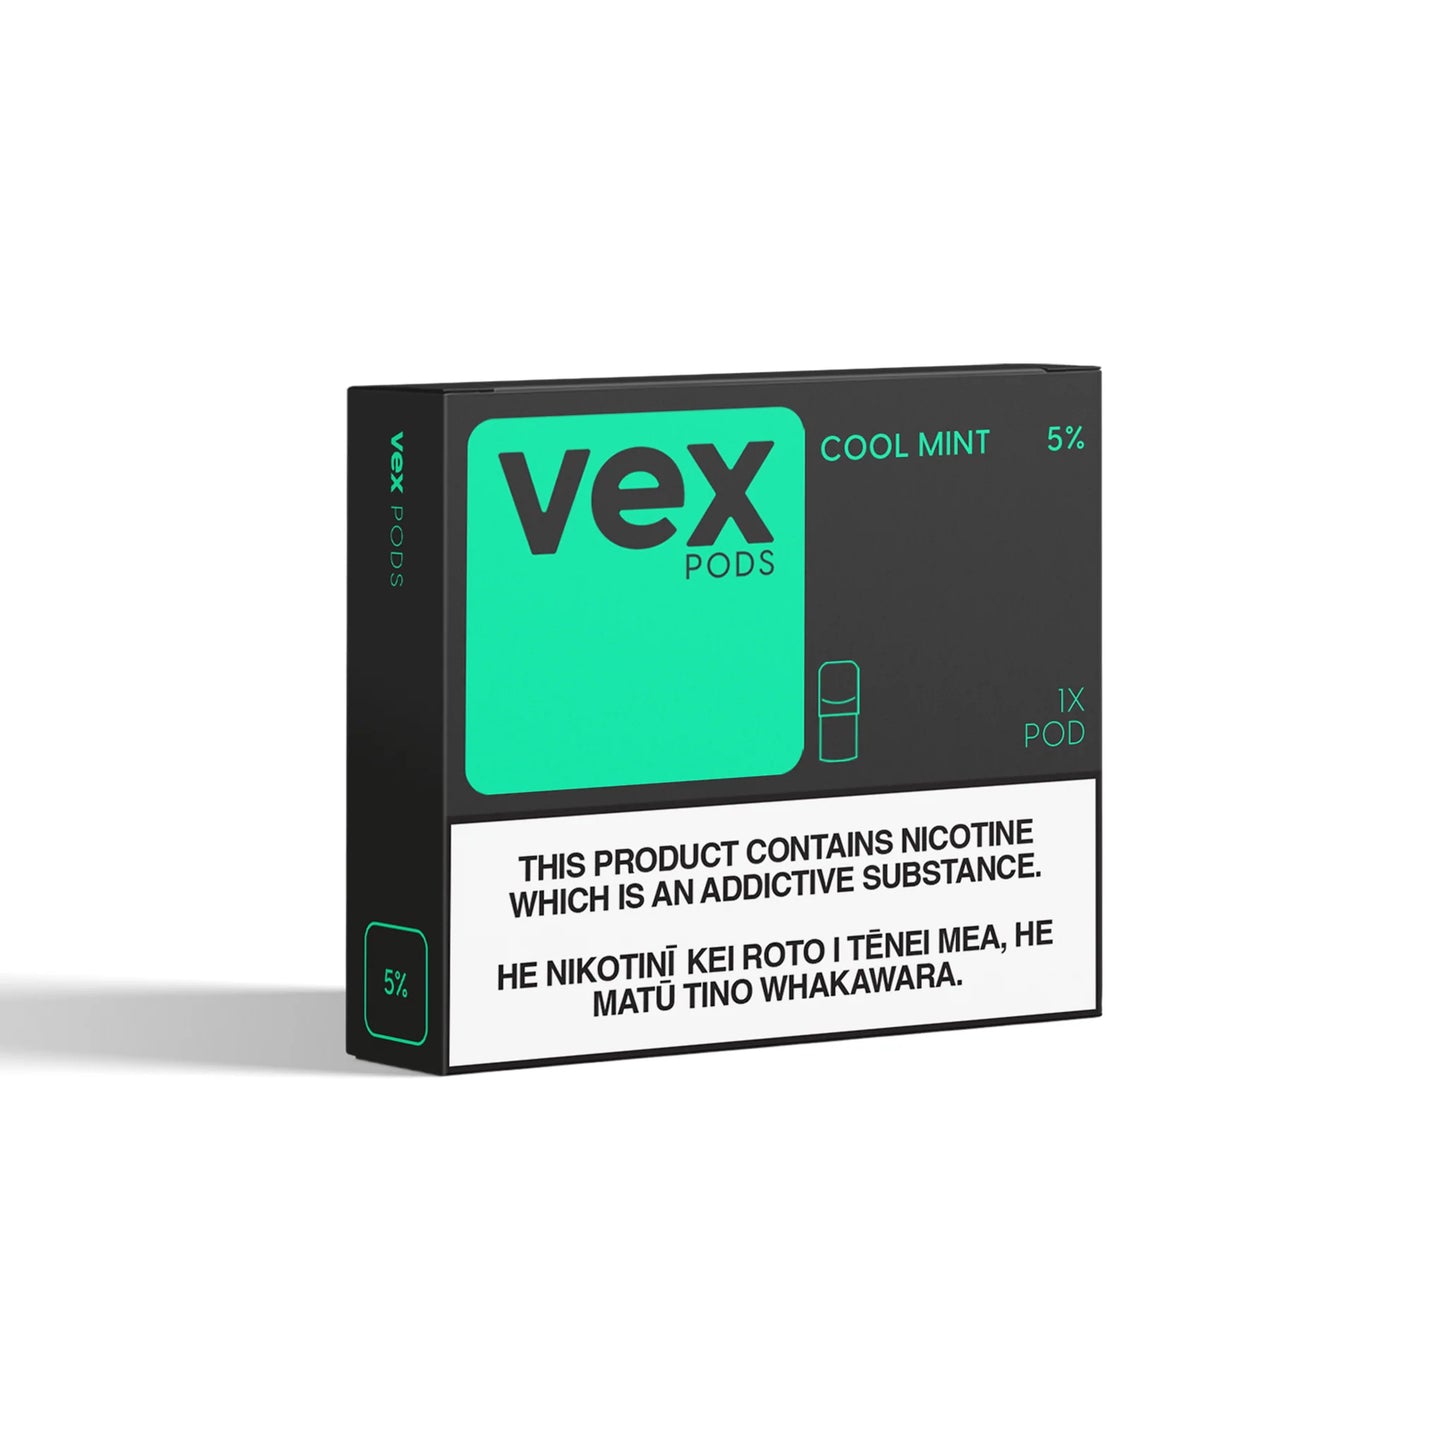 VEX - Cool Mint 5% - 2020 Vapes